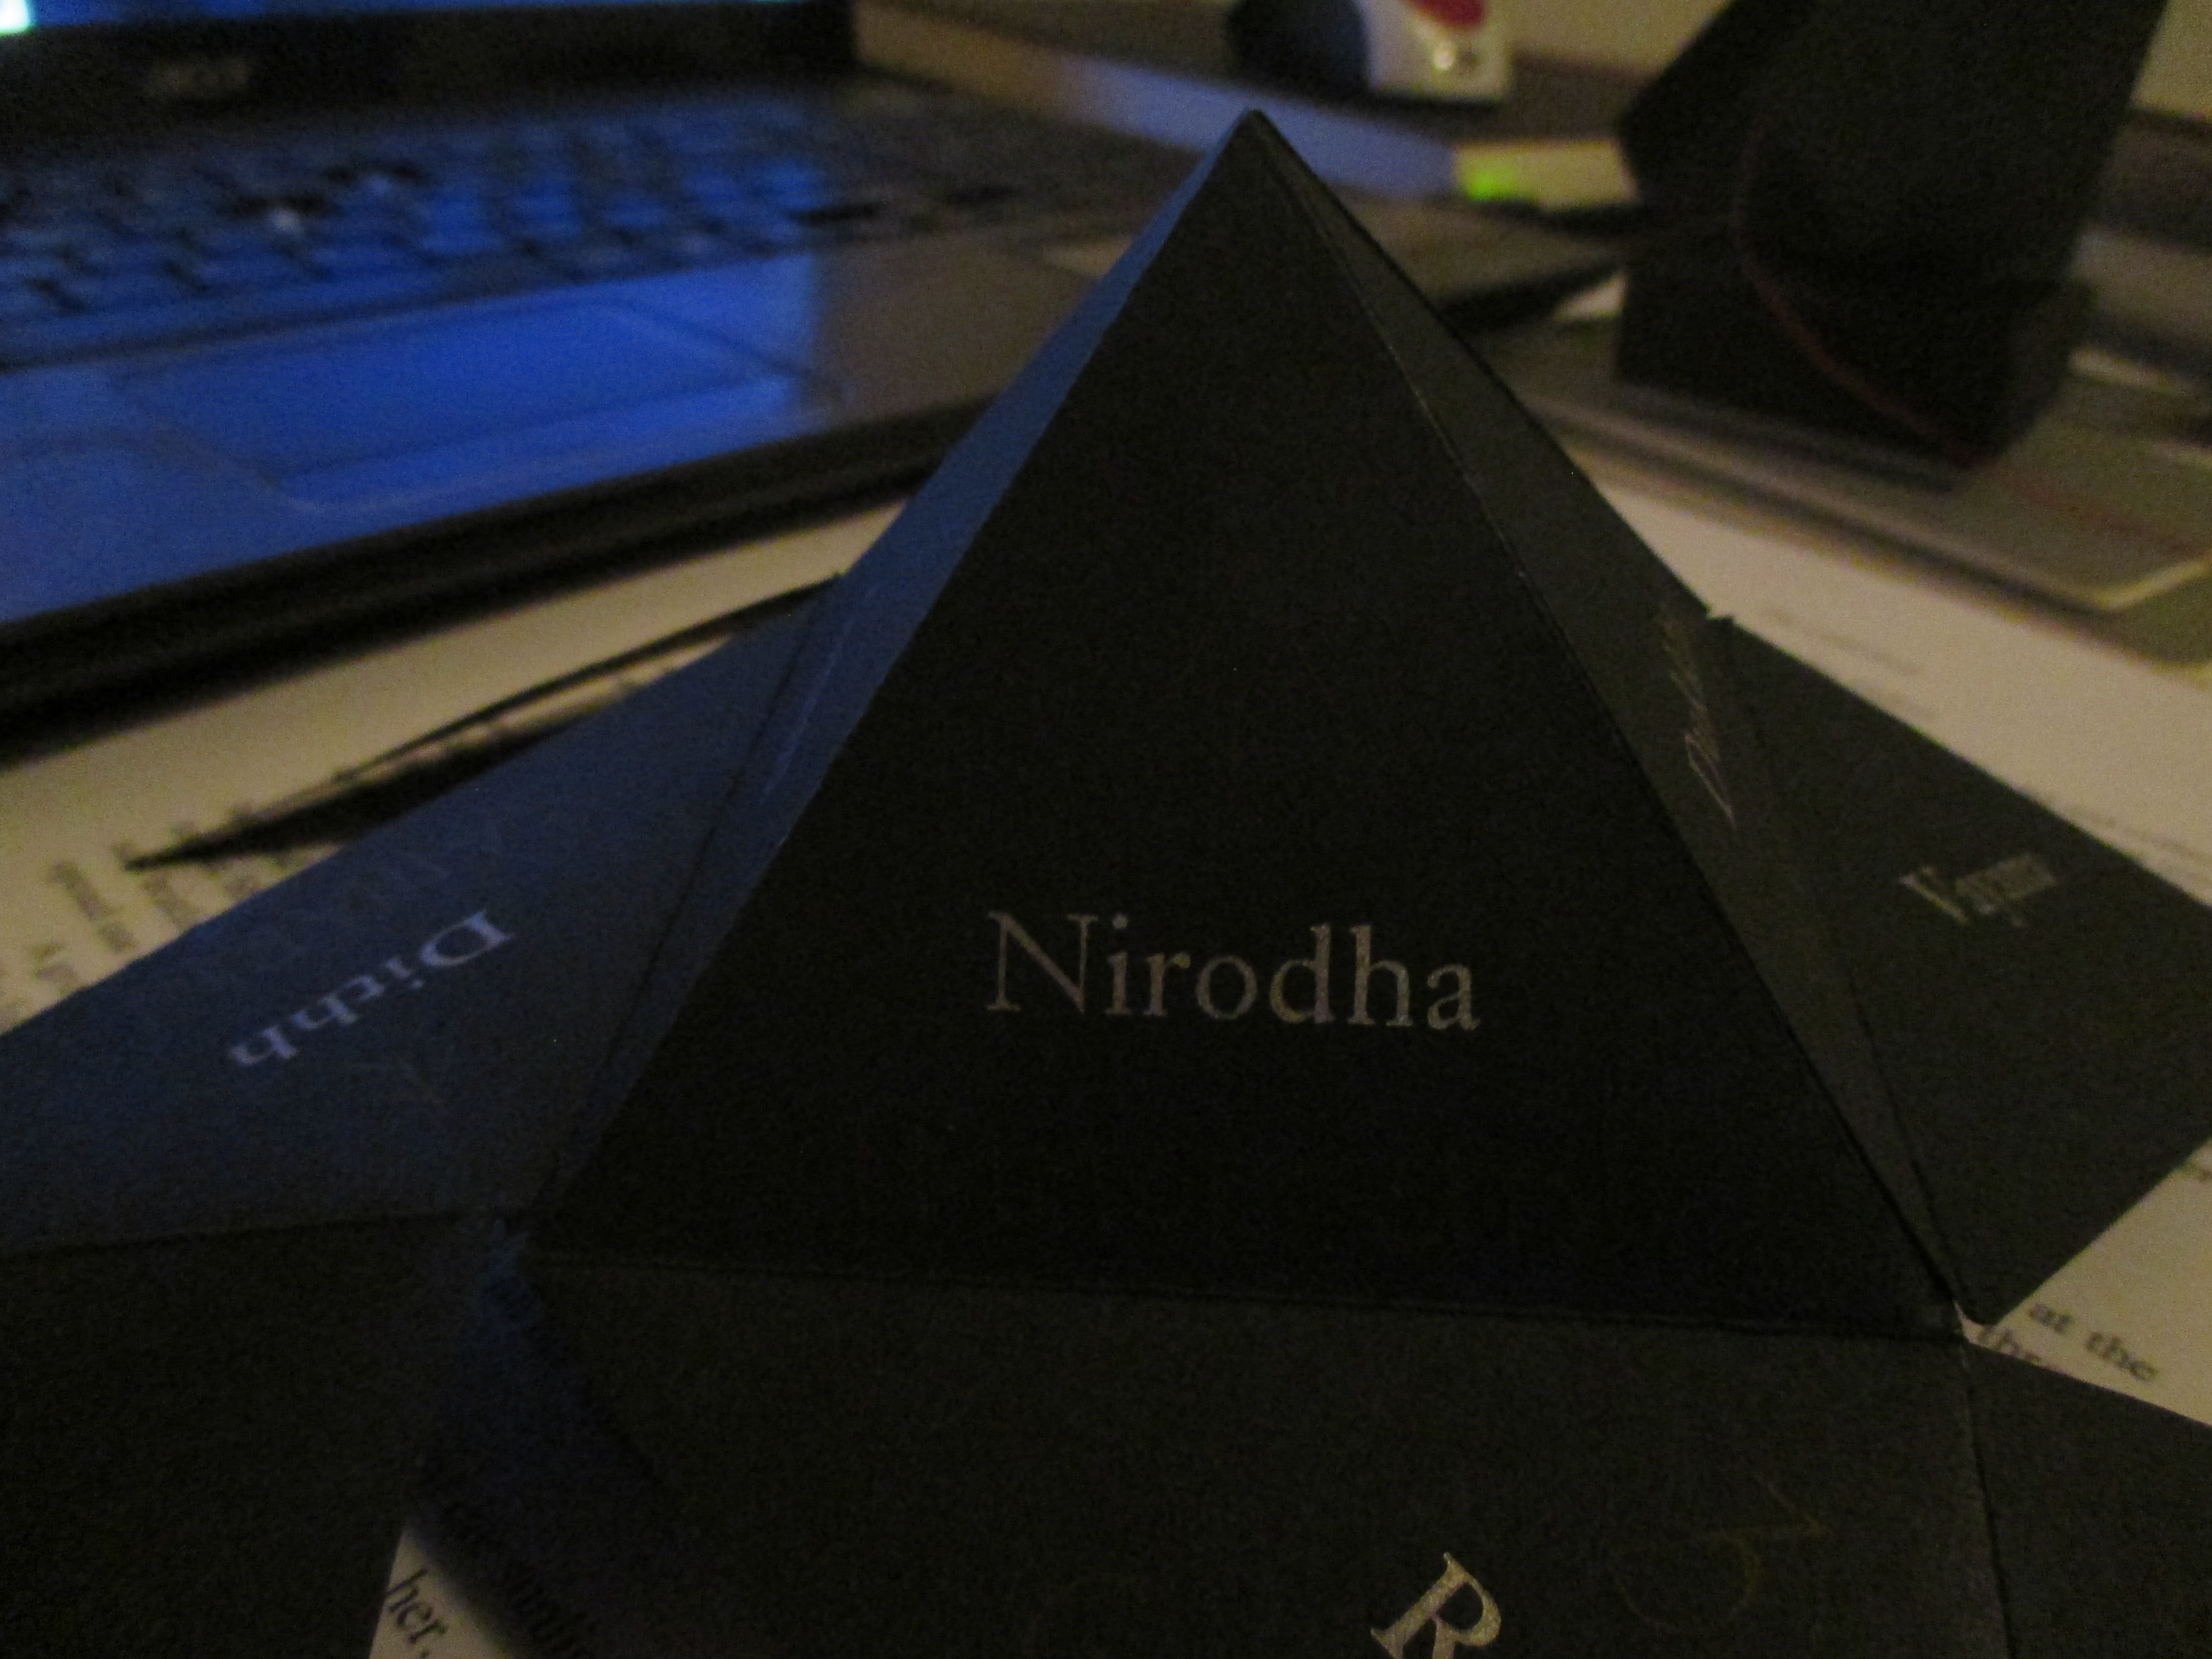 The origami pyramid Nirodha.